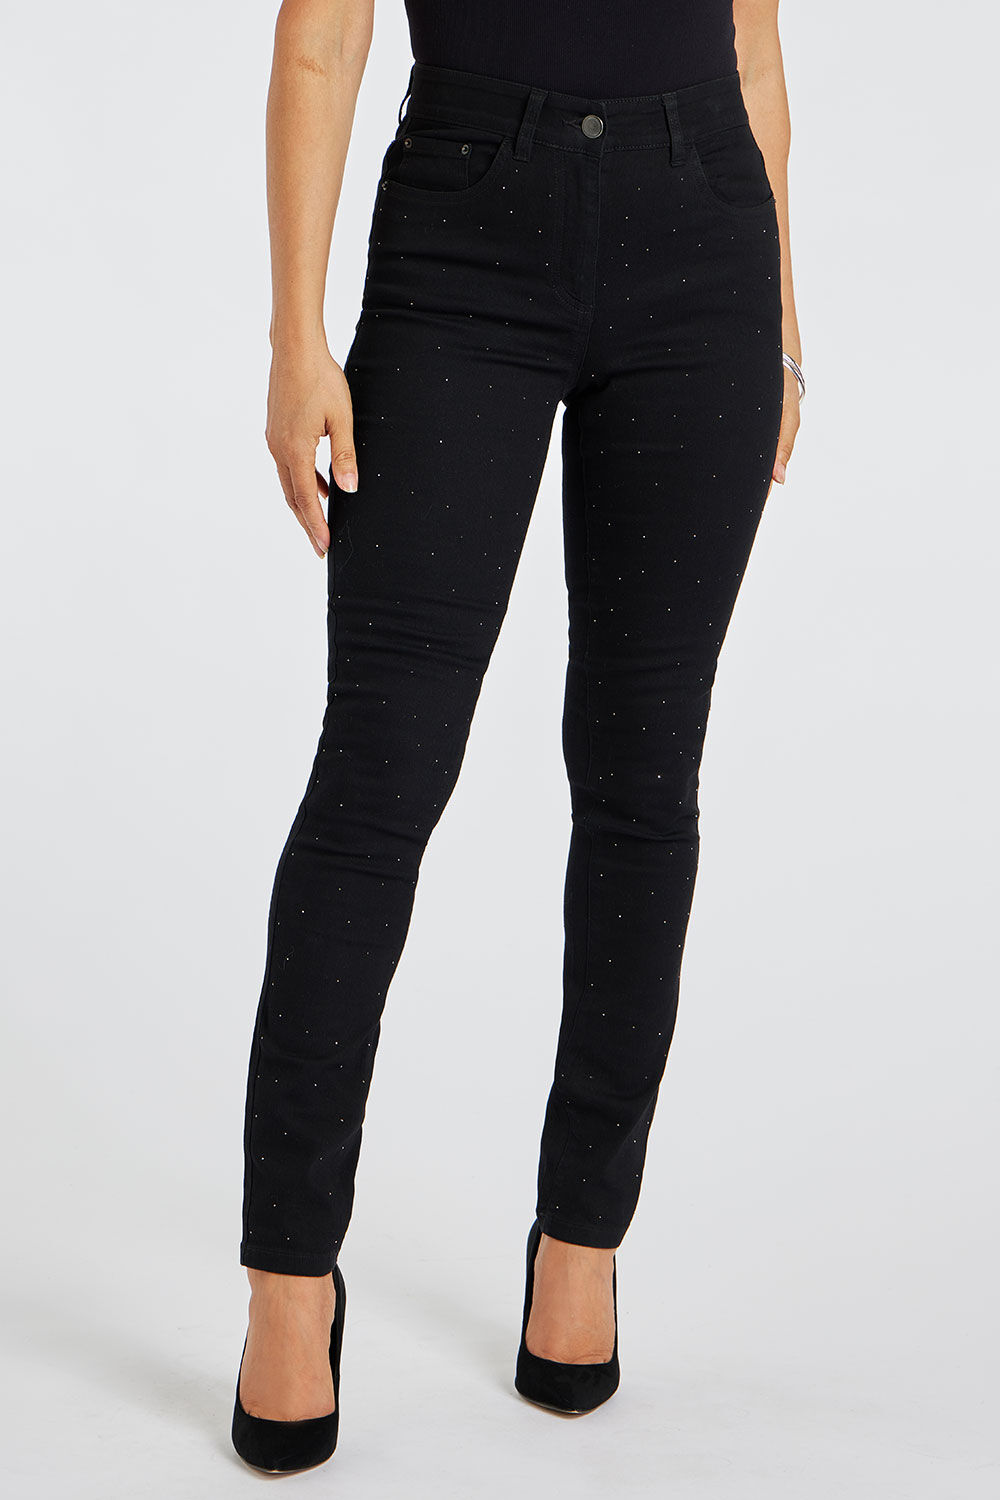 Bonmarche Black The Susie Embellished Front Slim Leg Jeans, Size: 10